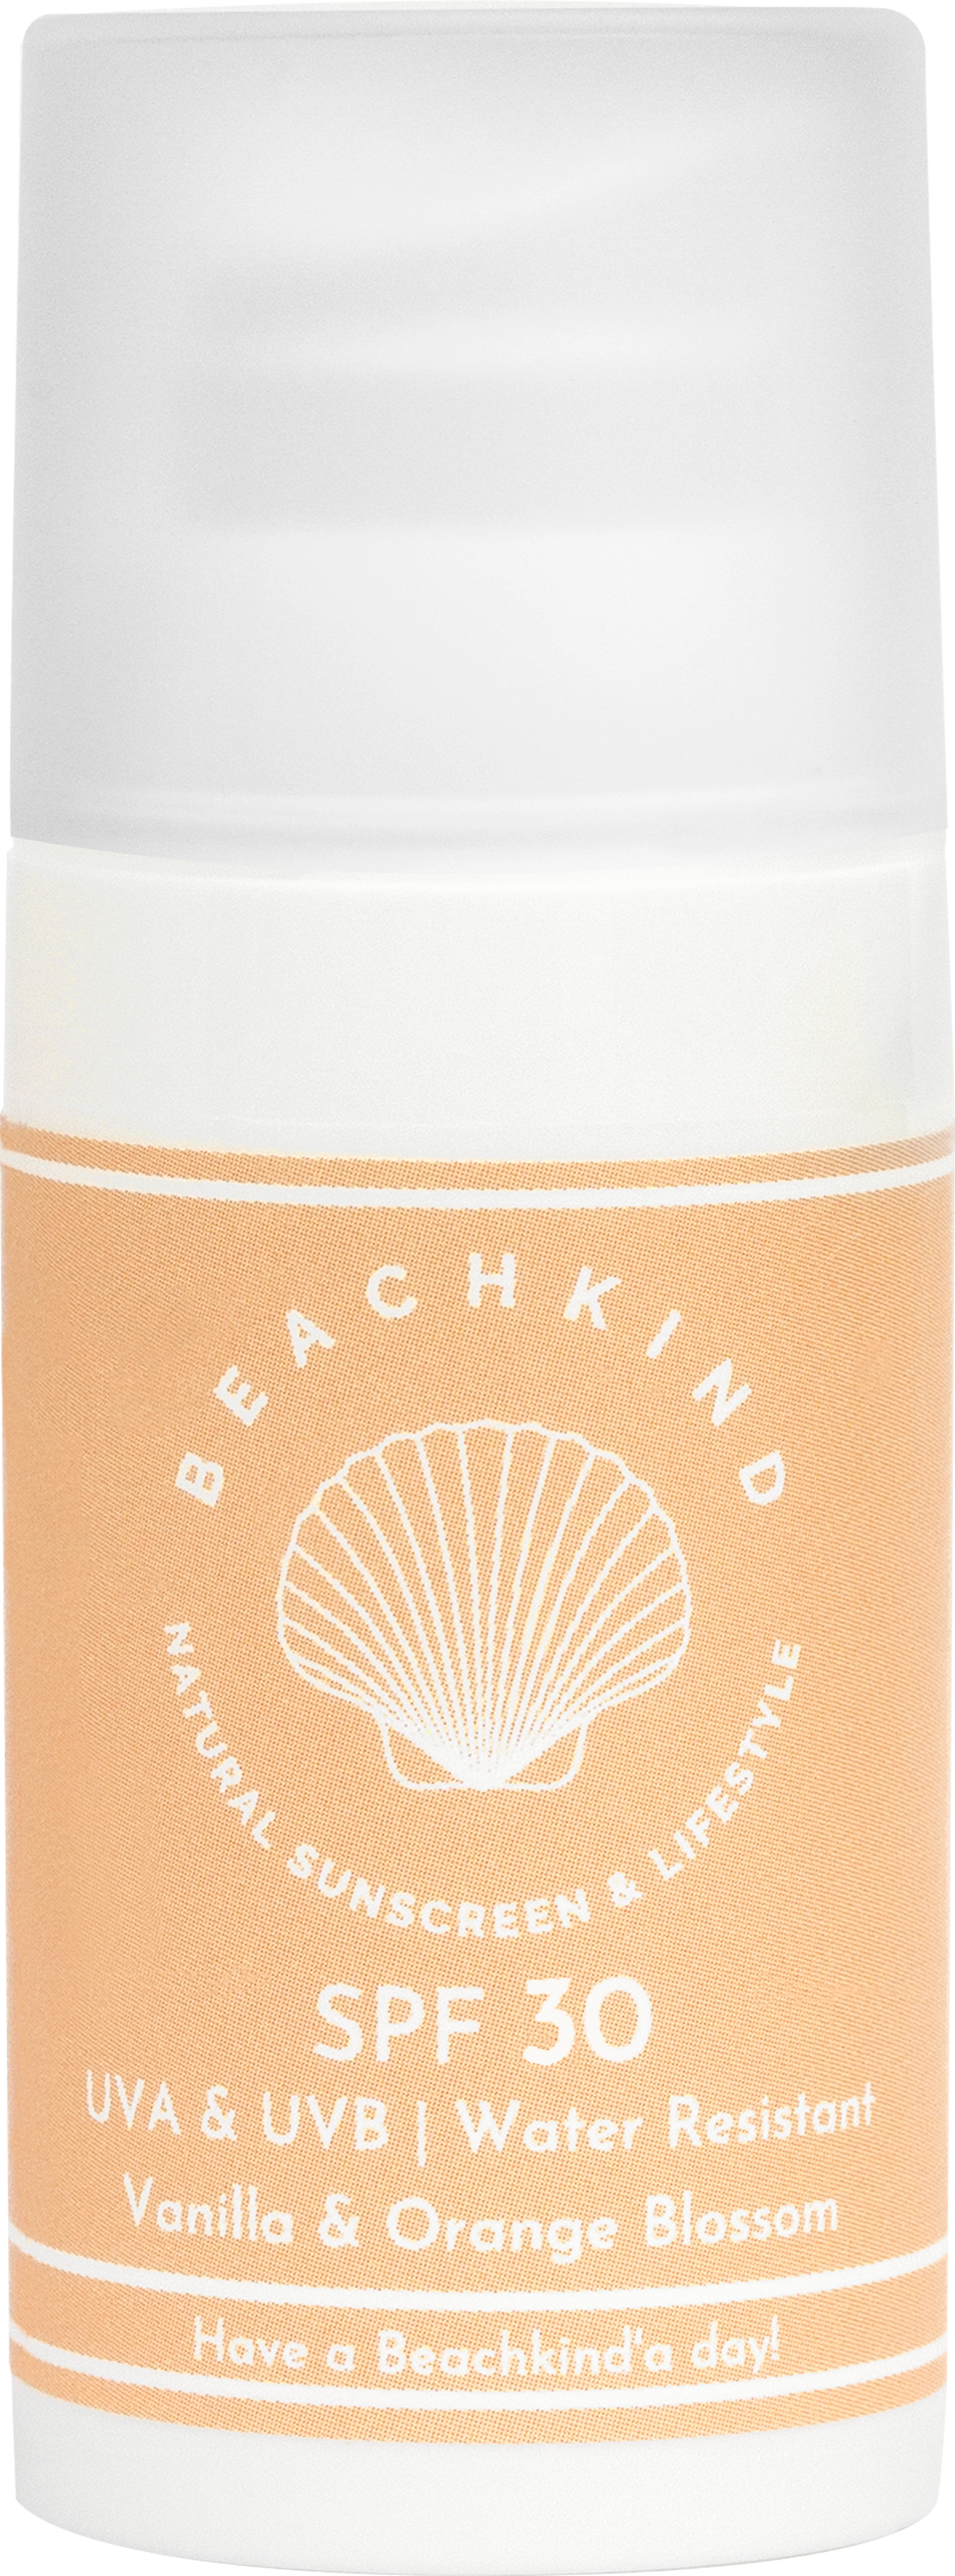 Beachkind Natural sunscreen SPF 30 15ml